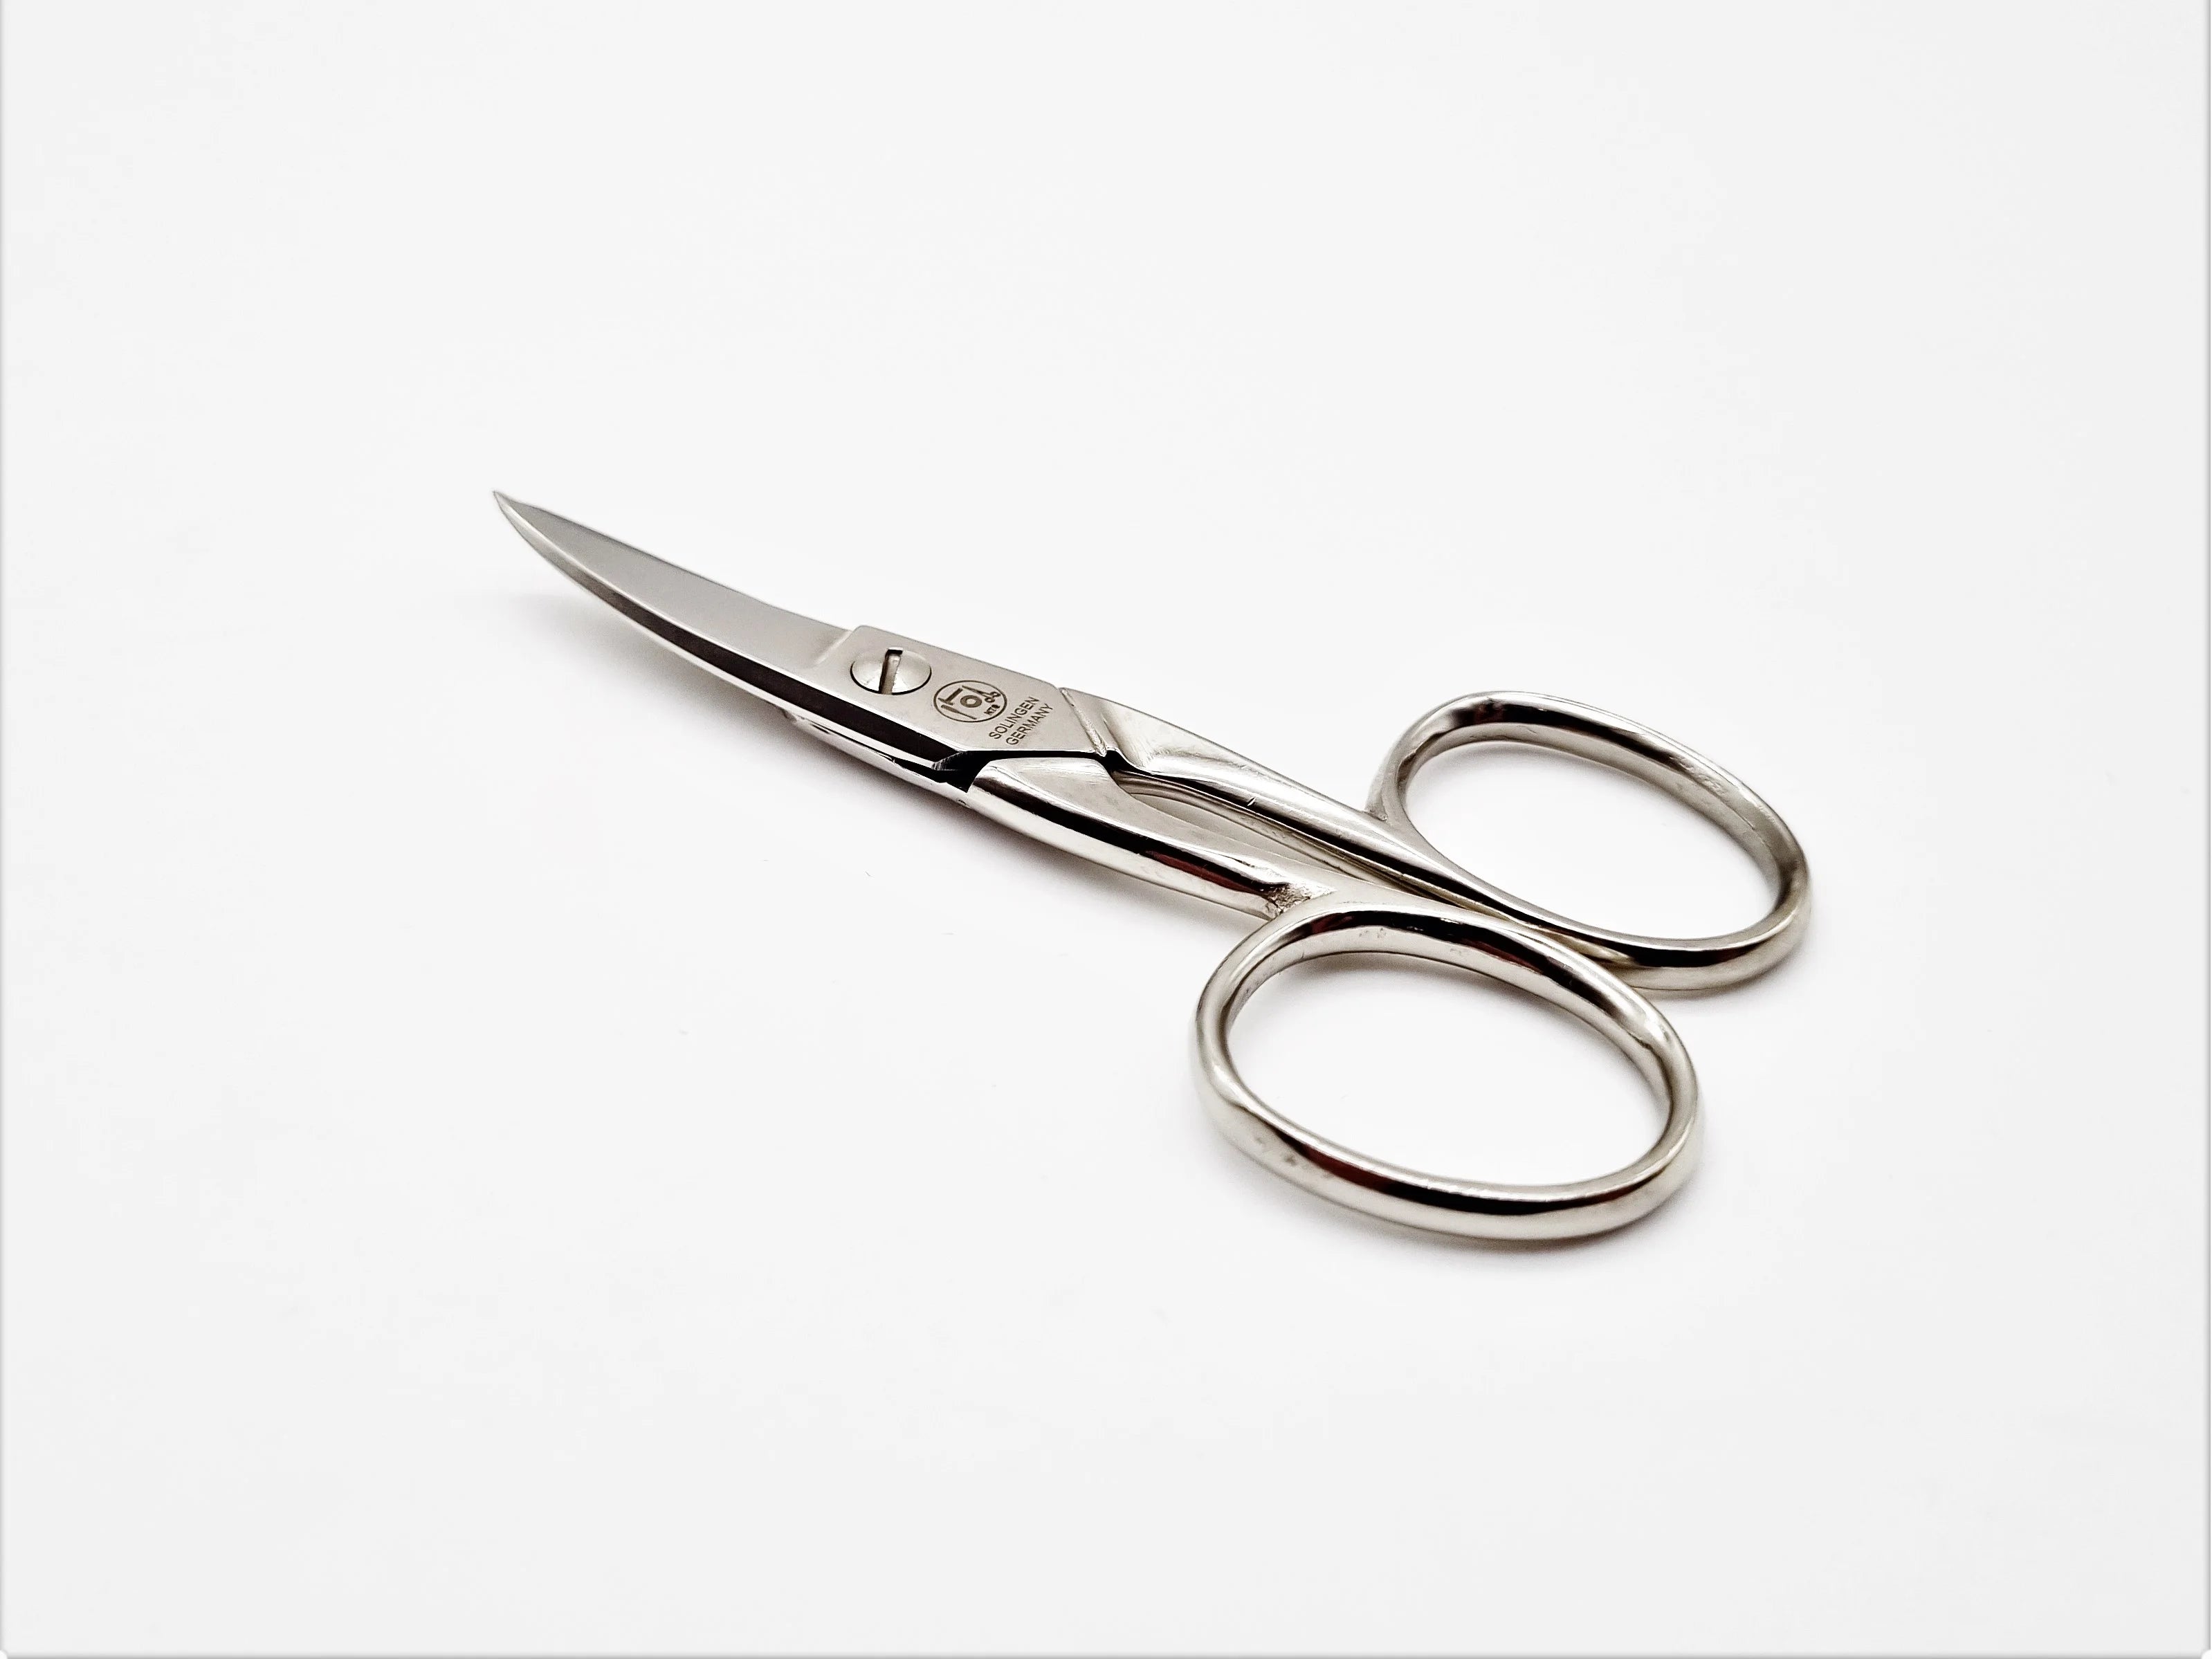 Nail scissors heavy duty nickel plated , size 3.5"